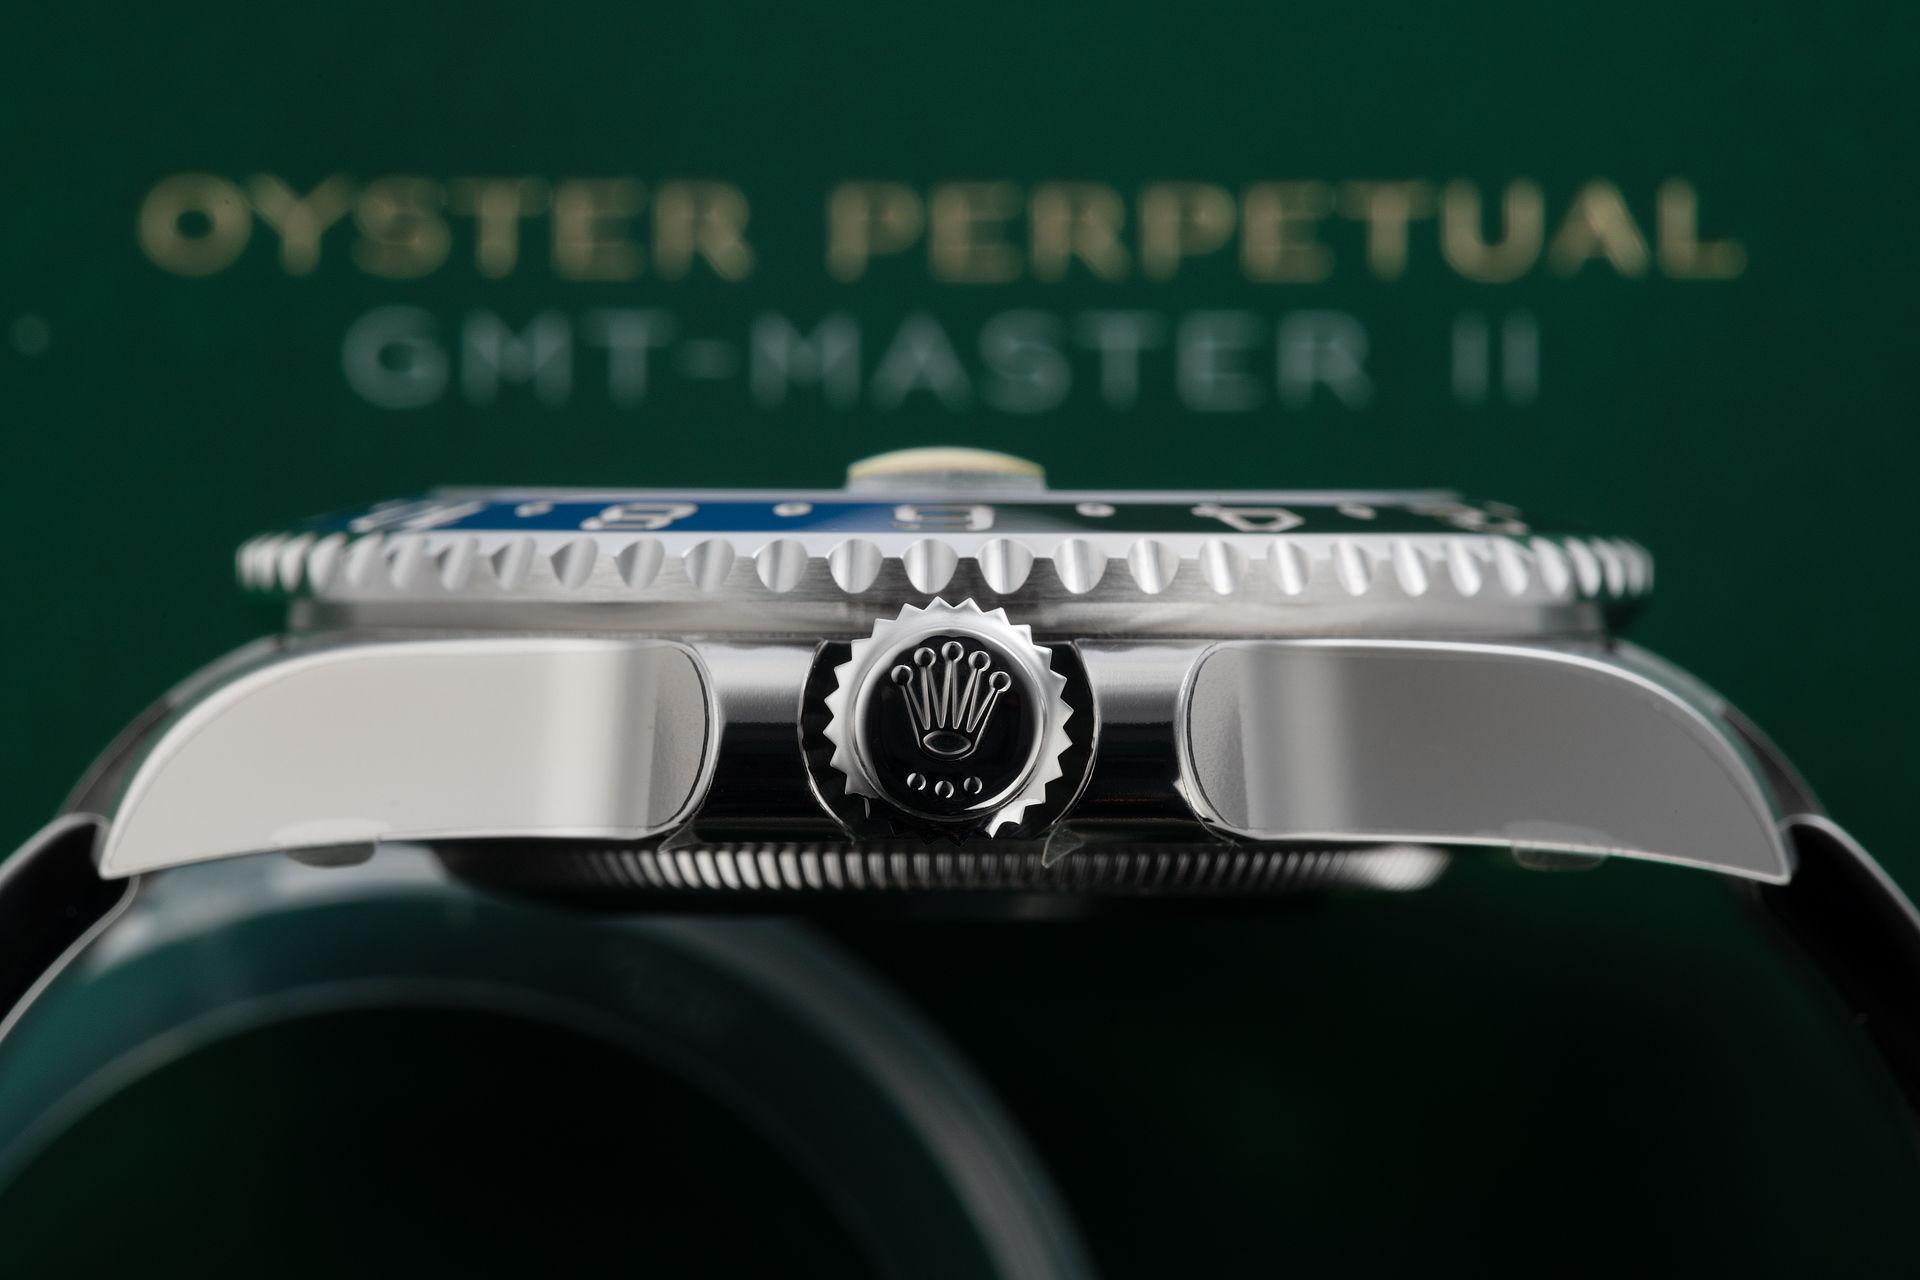 "Brand New" Fully Stickered | ref 116710BLNR | Rolex GMT-Master II